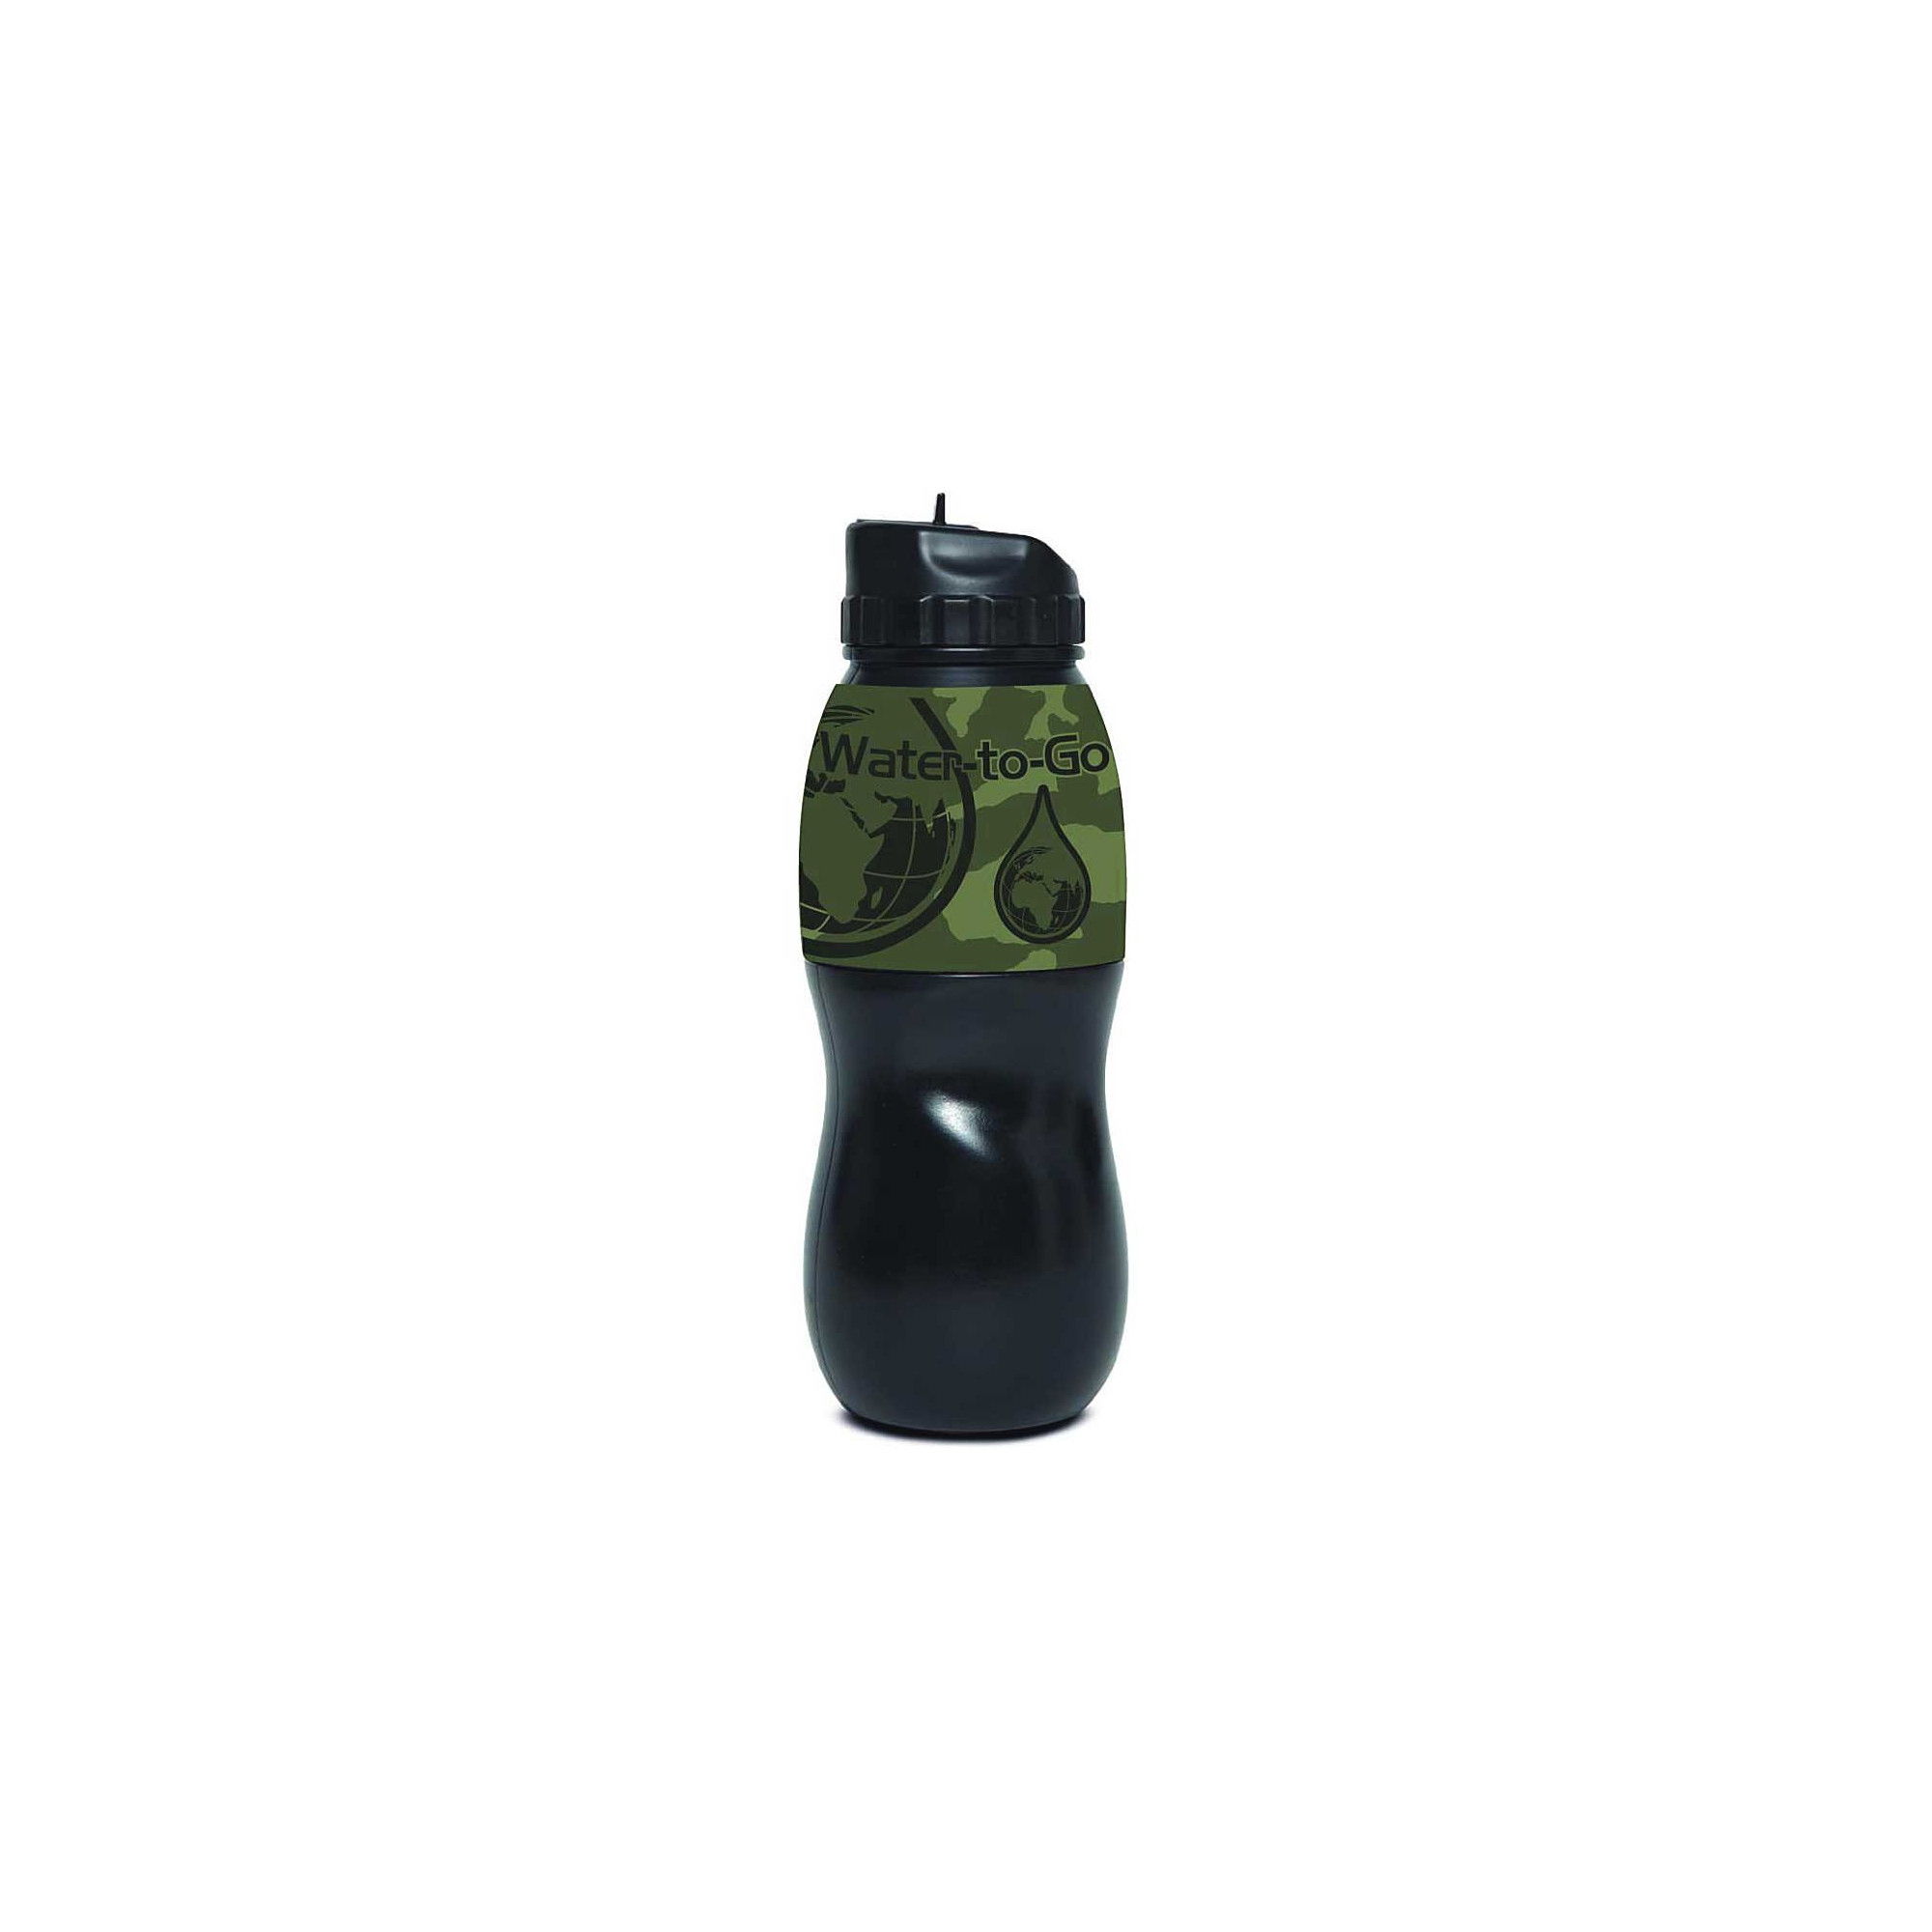 Jungle water filter bottle